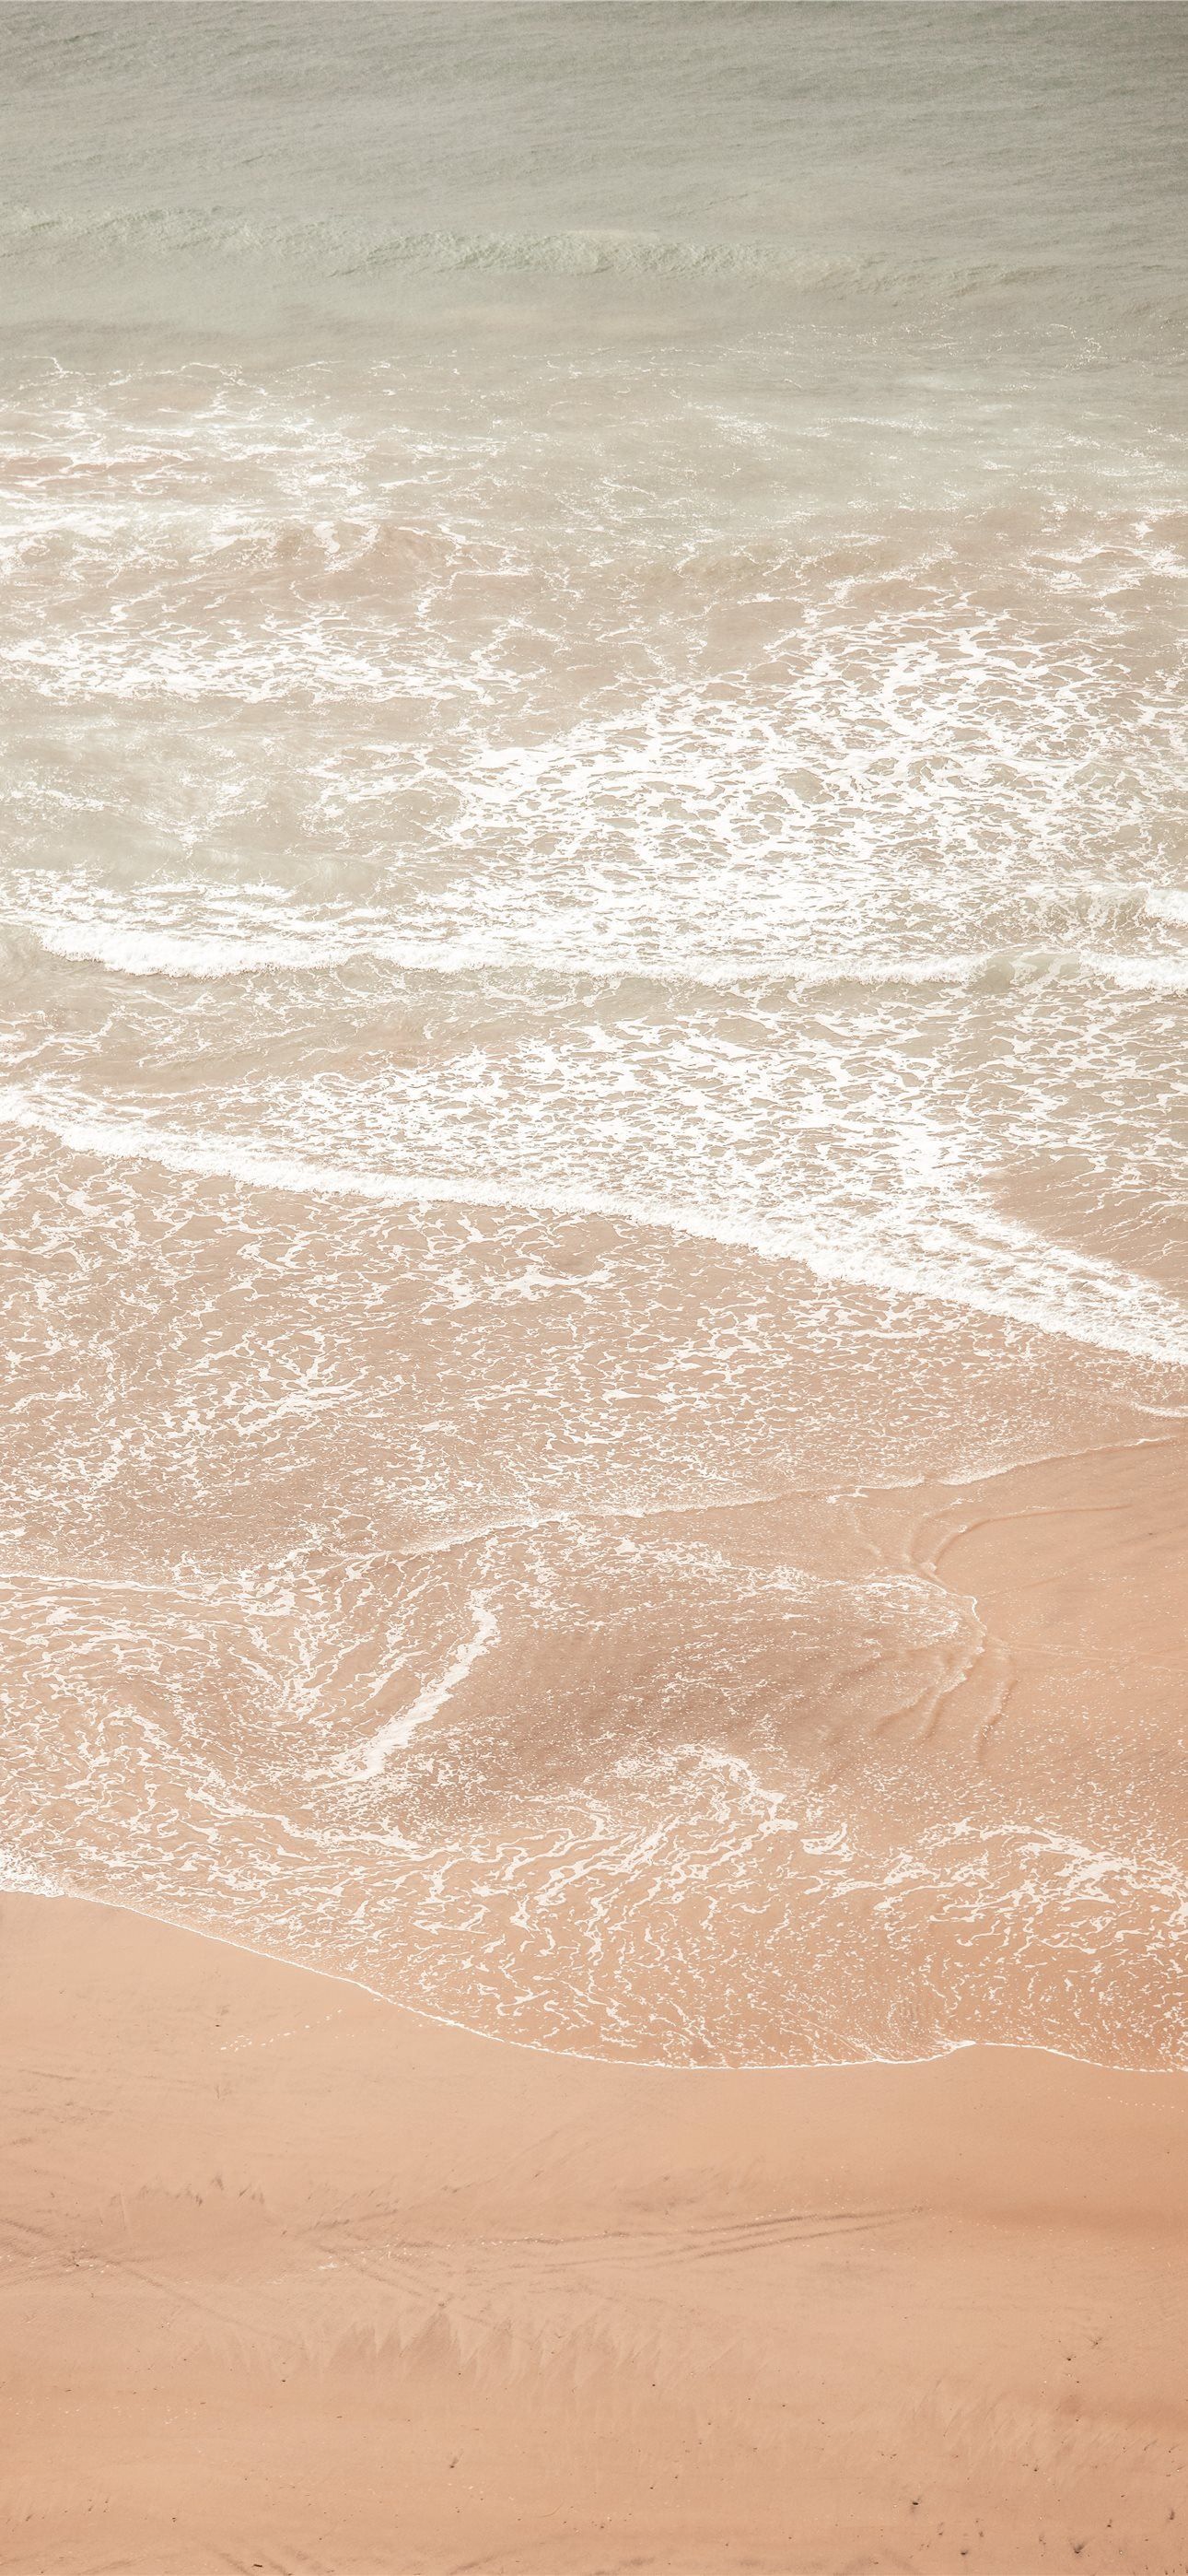  Sand Hintergrundbild 1290x2796. brown sand near body of water during daytime iPhone Wallpaper Free Download